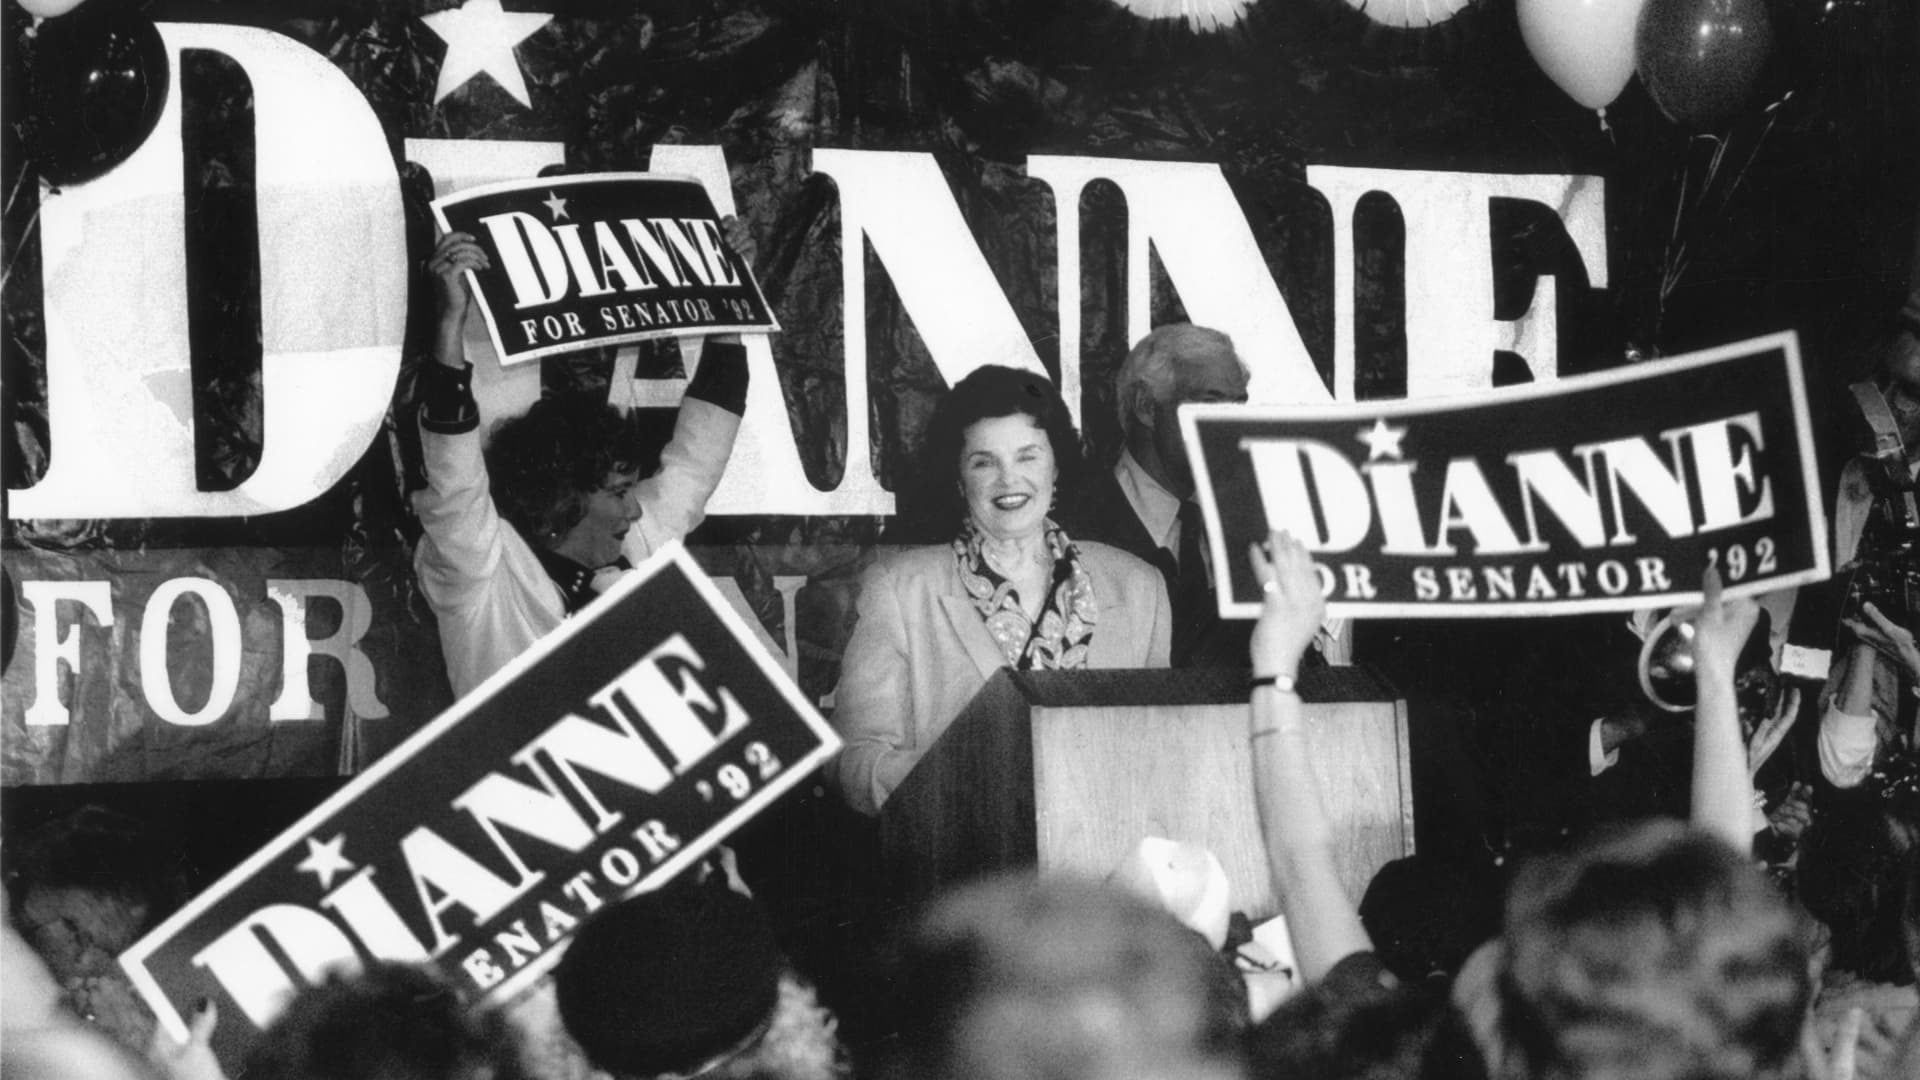 Candidate Dianne Feinstein celebrates her primary win, June 2, 1992.